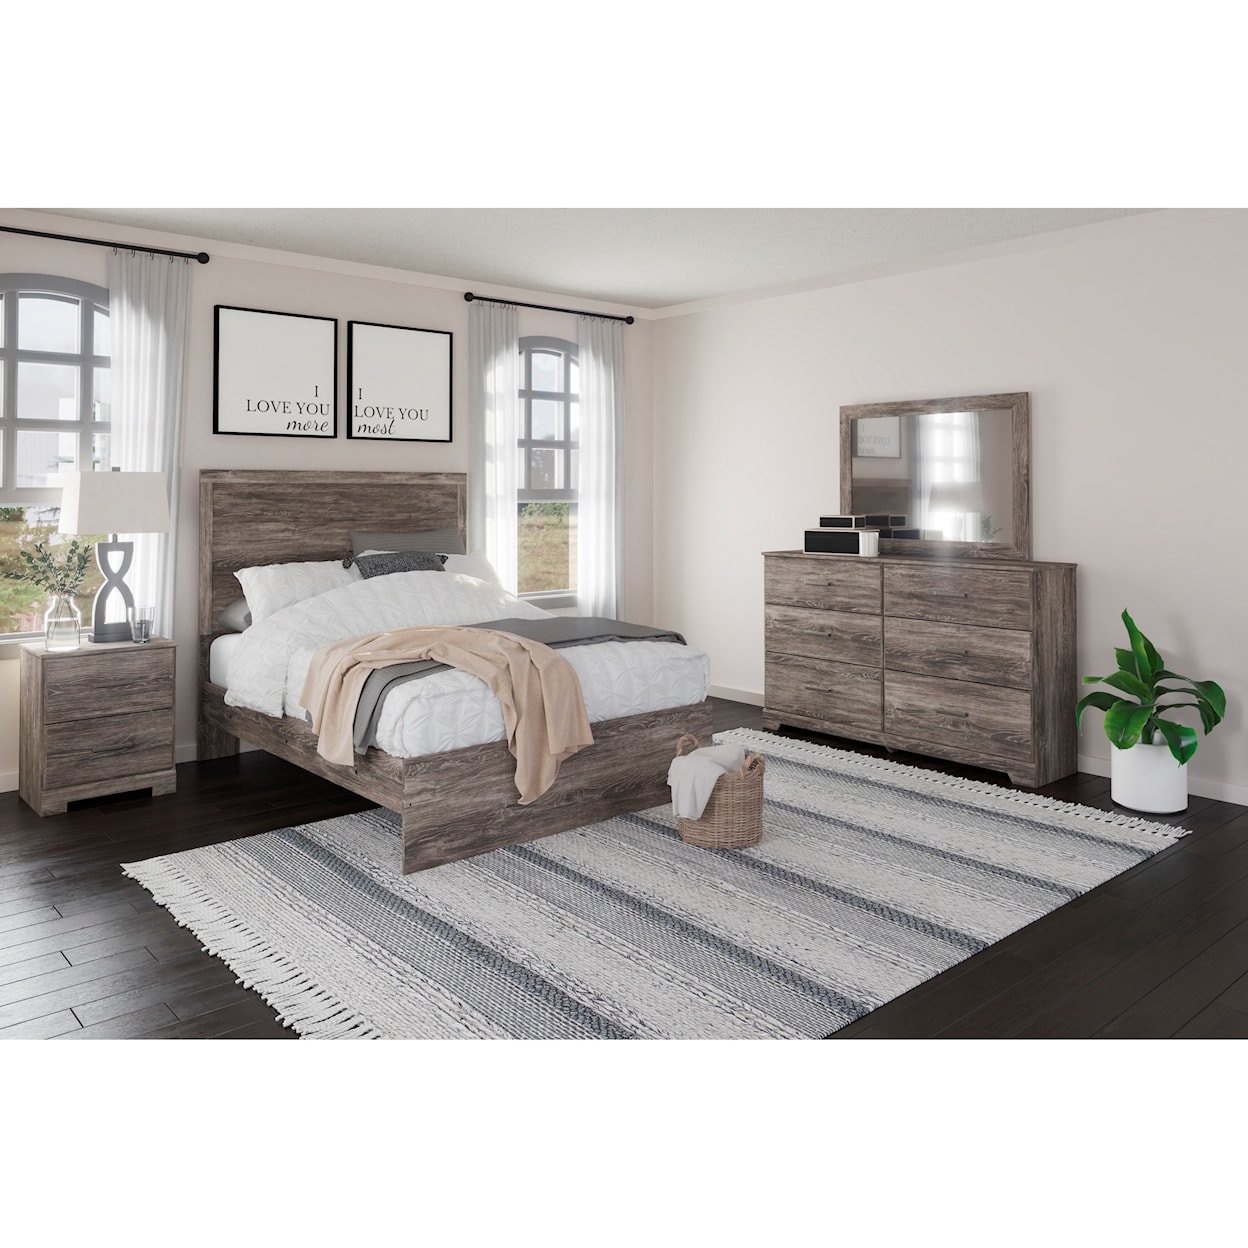 Ashley Furniture Signature Design Ralinksi Full Bedroom Group